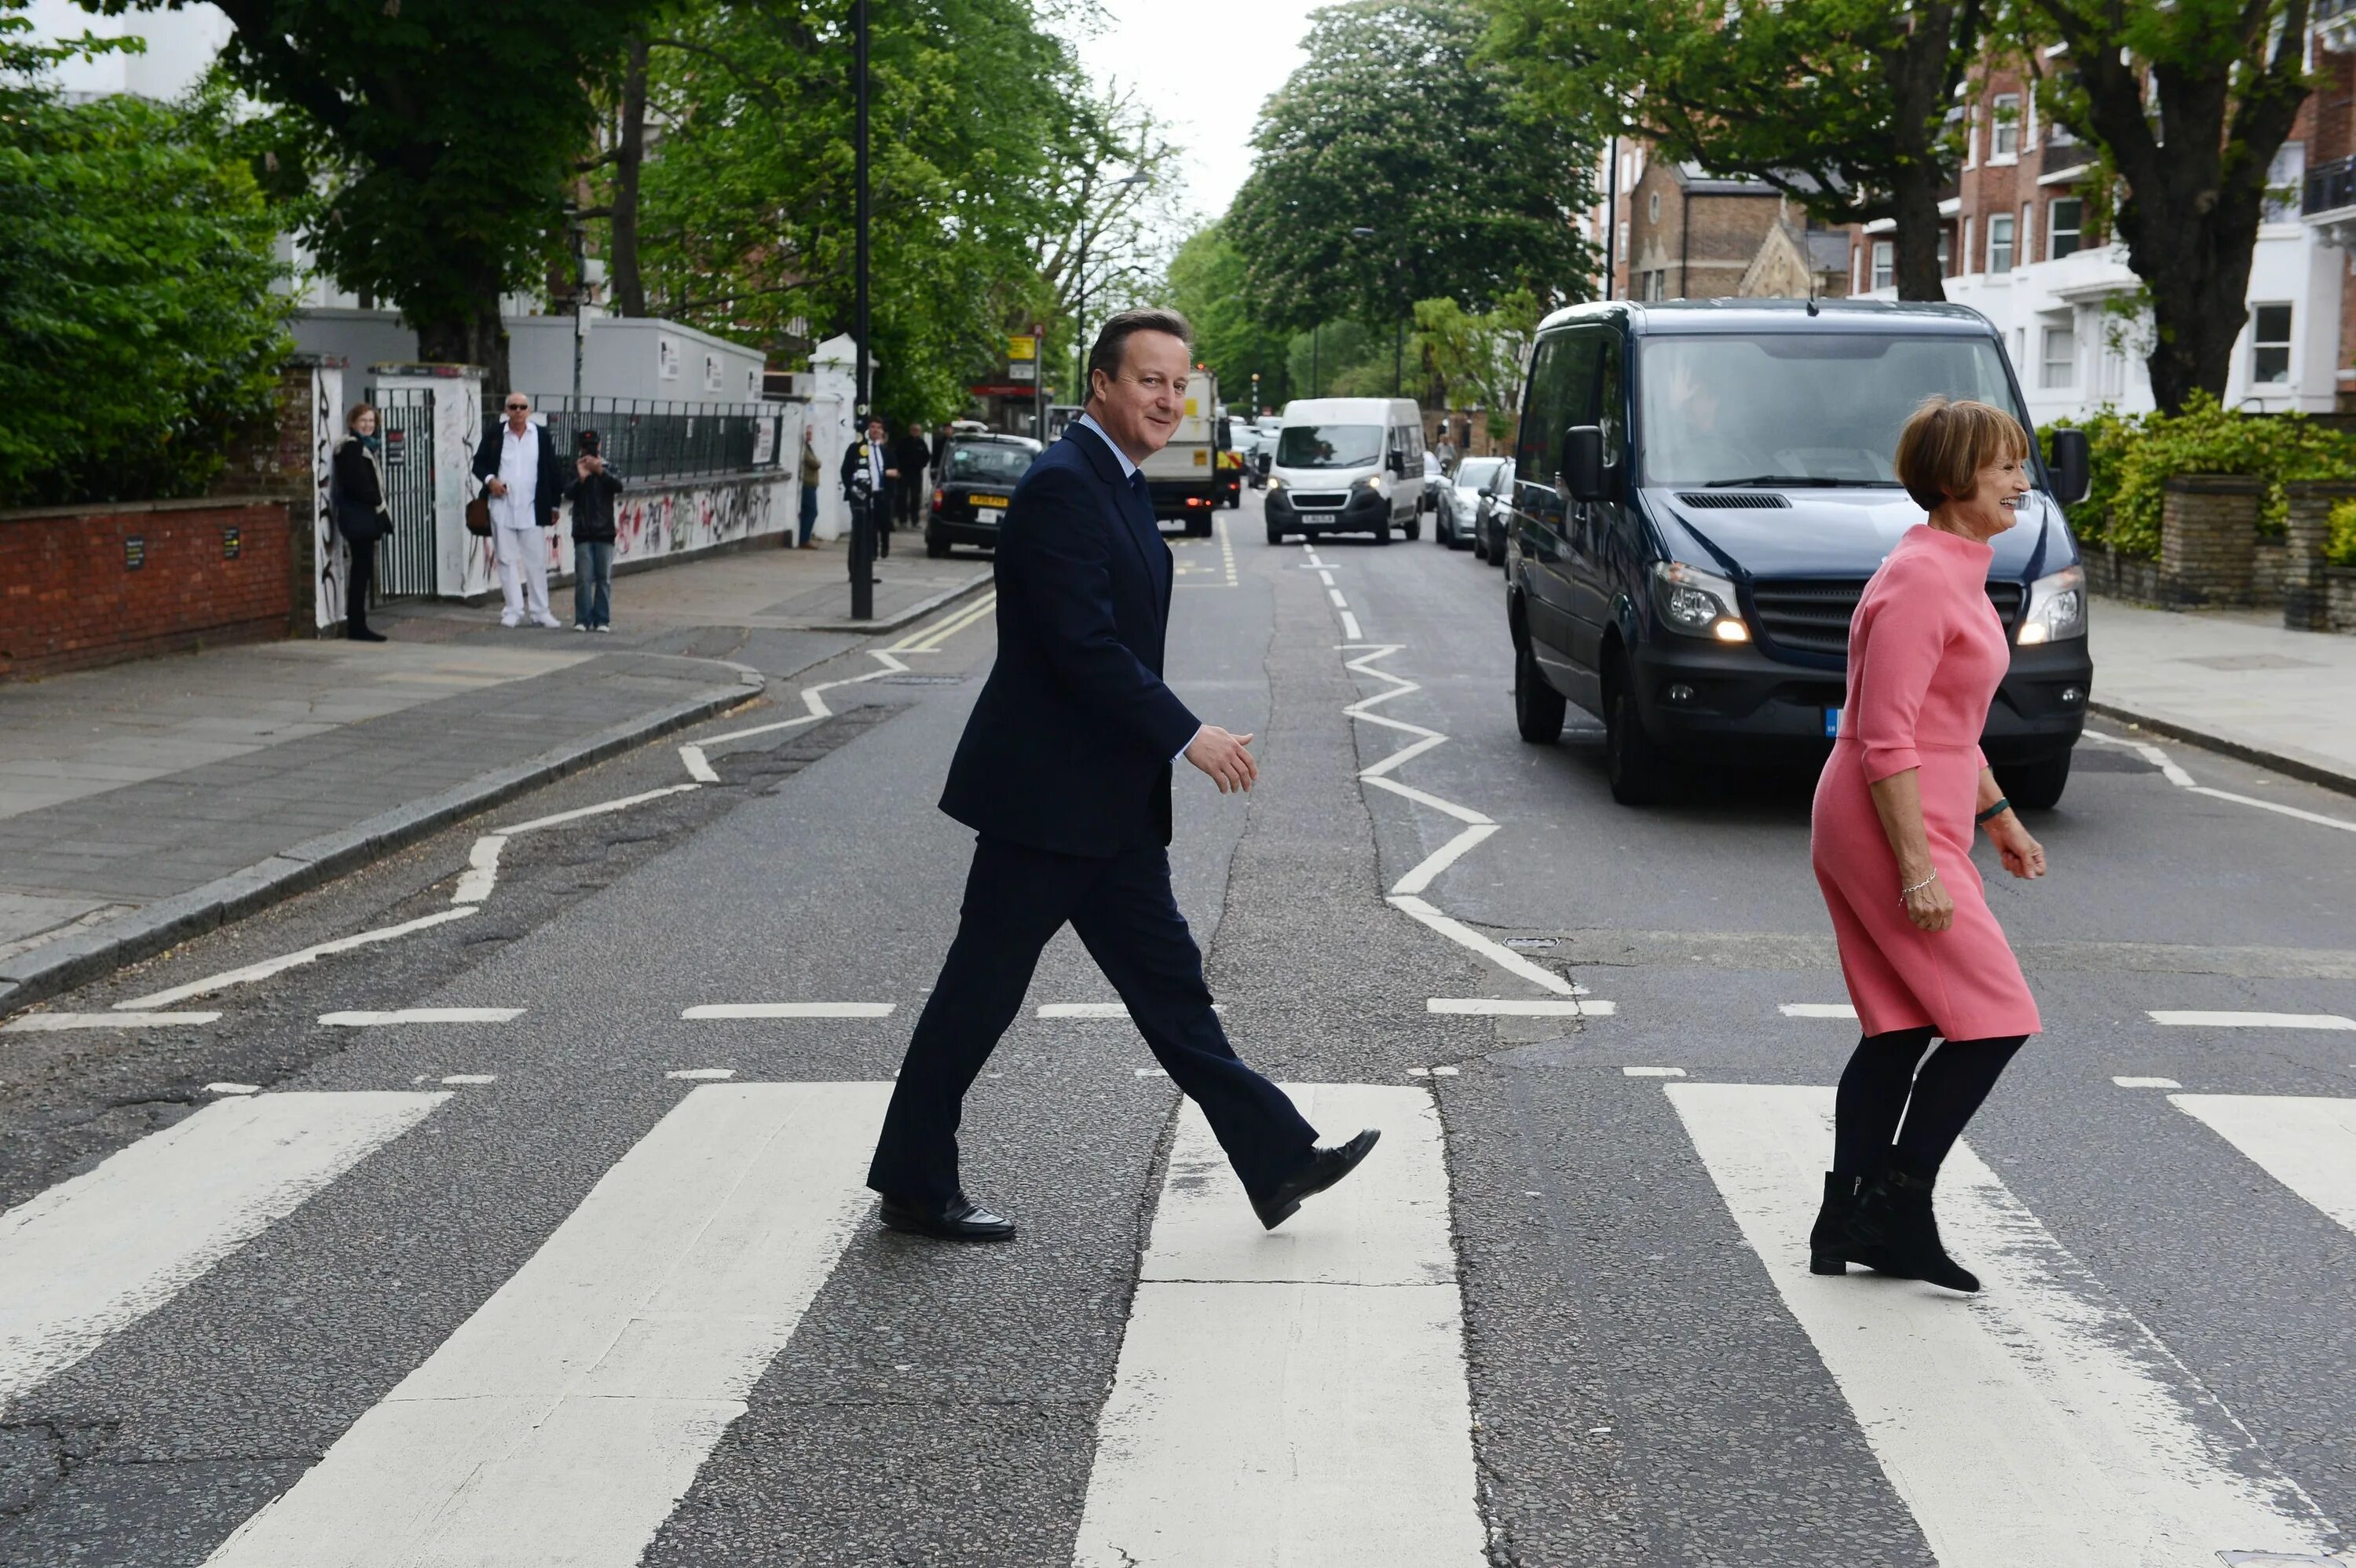 Он переходил дорогу не смотря по сторонам. Эбби роуд Лондон. Люди на переходе. Люди на пешеходном переходе. Человек переходит дорогу.